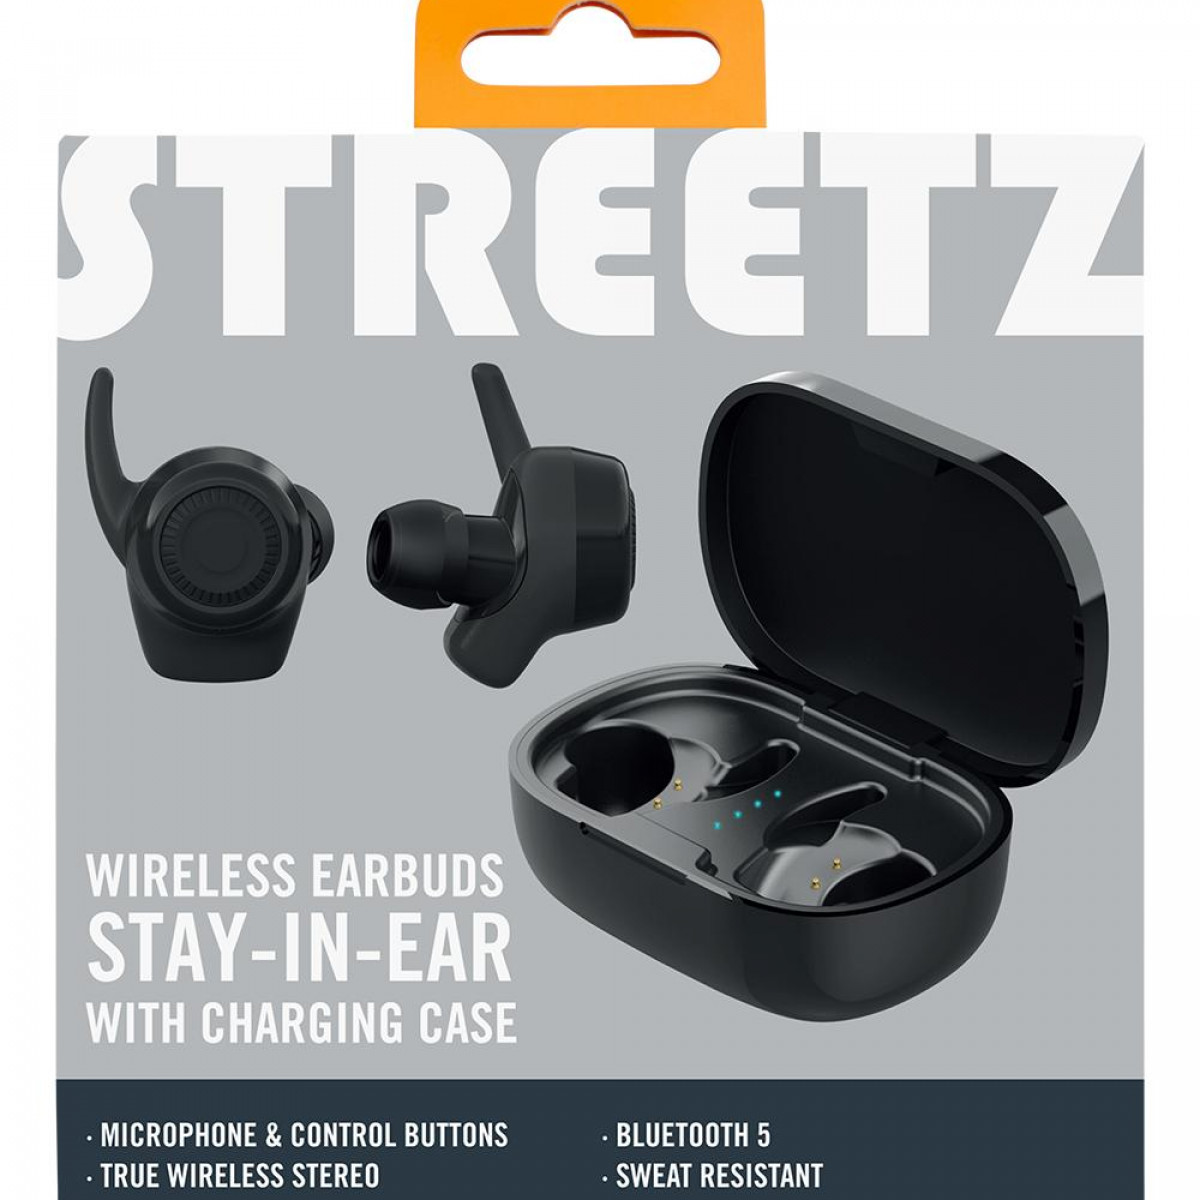 Schwarz Kopfhörer Kabelloser mit schweißresist, Stay-in-Ear-Kopfhörer In-ear STREETZ Ladeetui, STREETZ